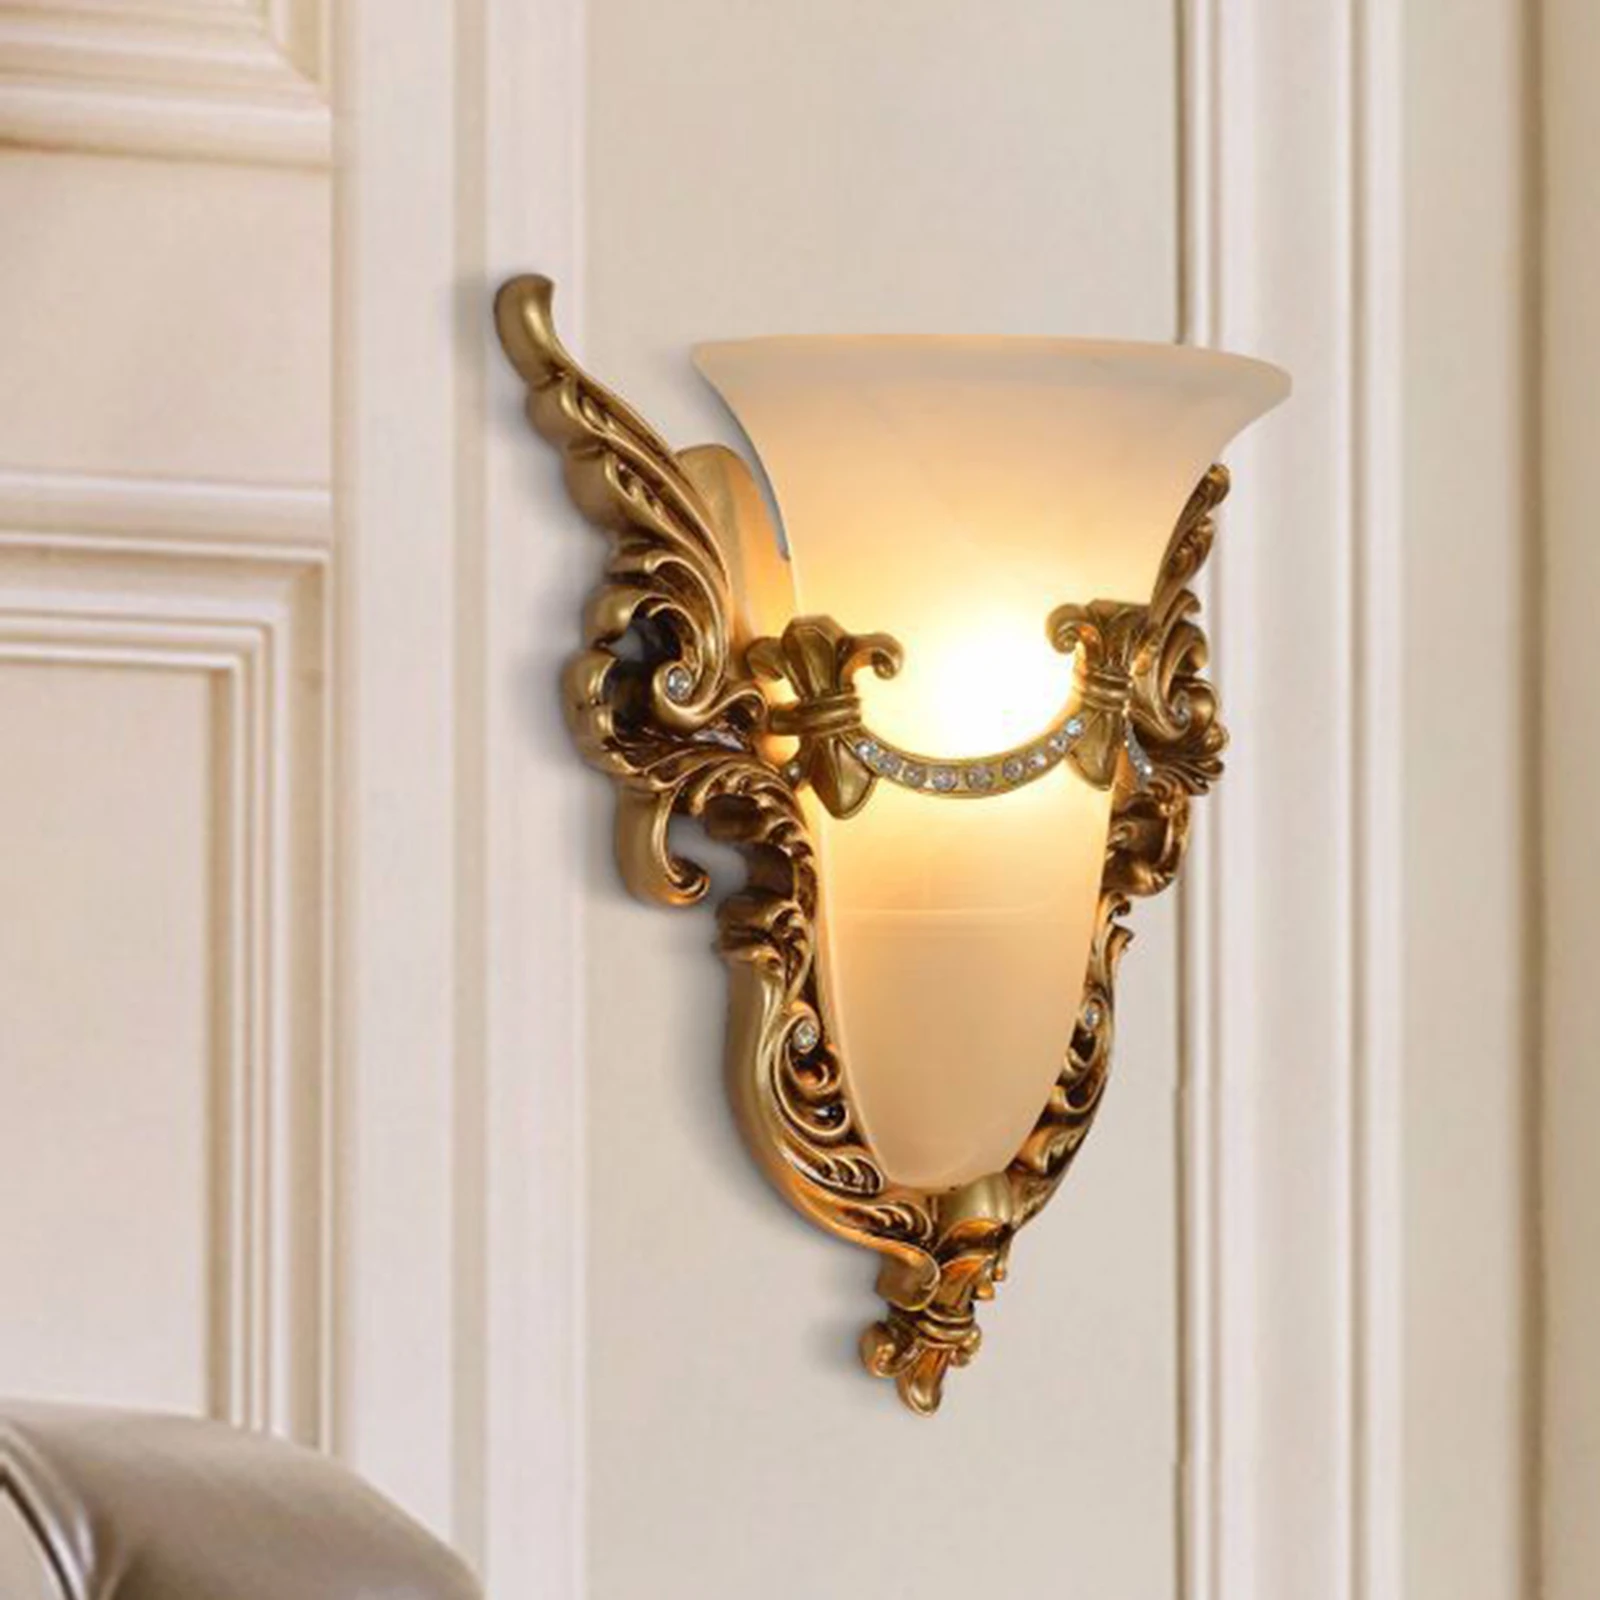 European-style Resin Wall Lamp E14 Bulb Retro Indoor Bedside Wall Sconce Light Fixture Lighting Gold Bedroom Decor